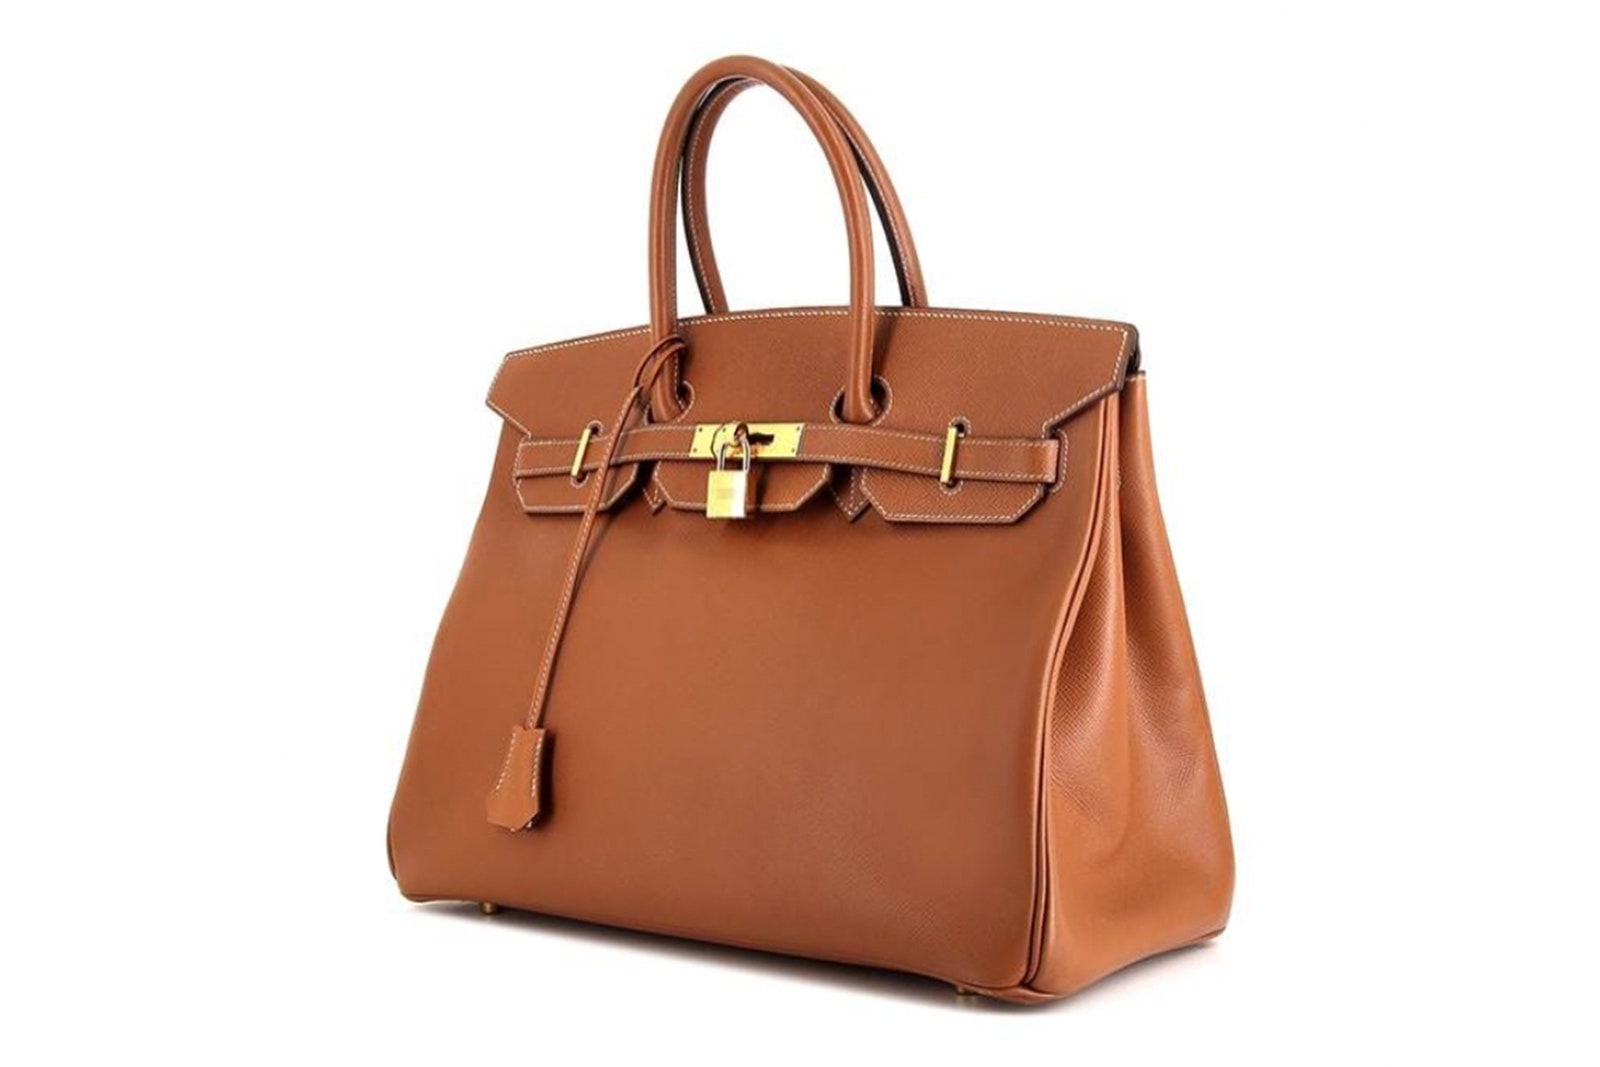 Tips to buy designer handbags